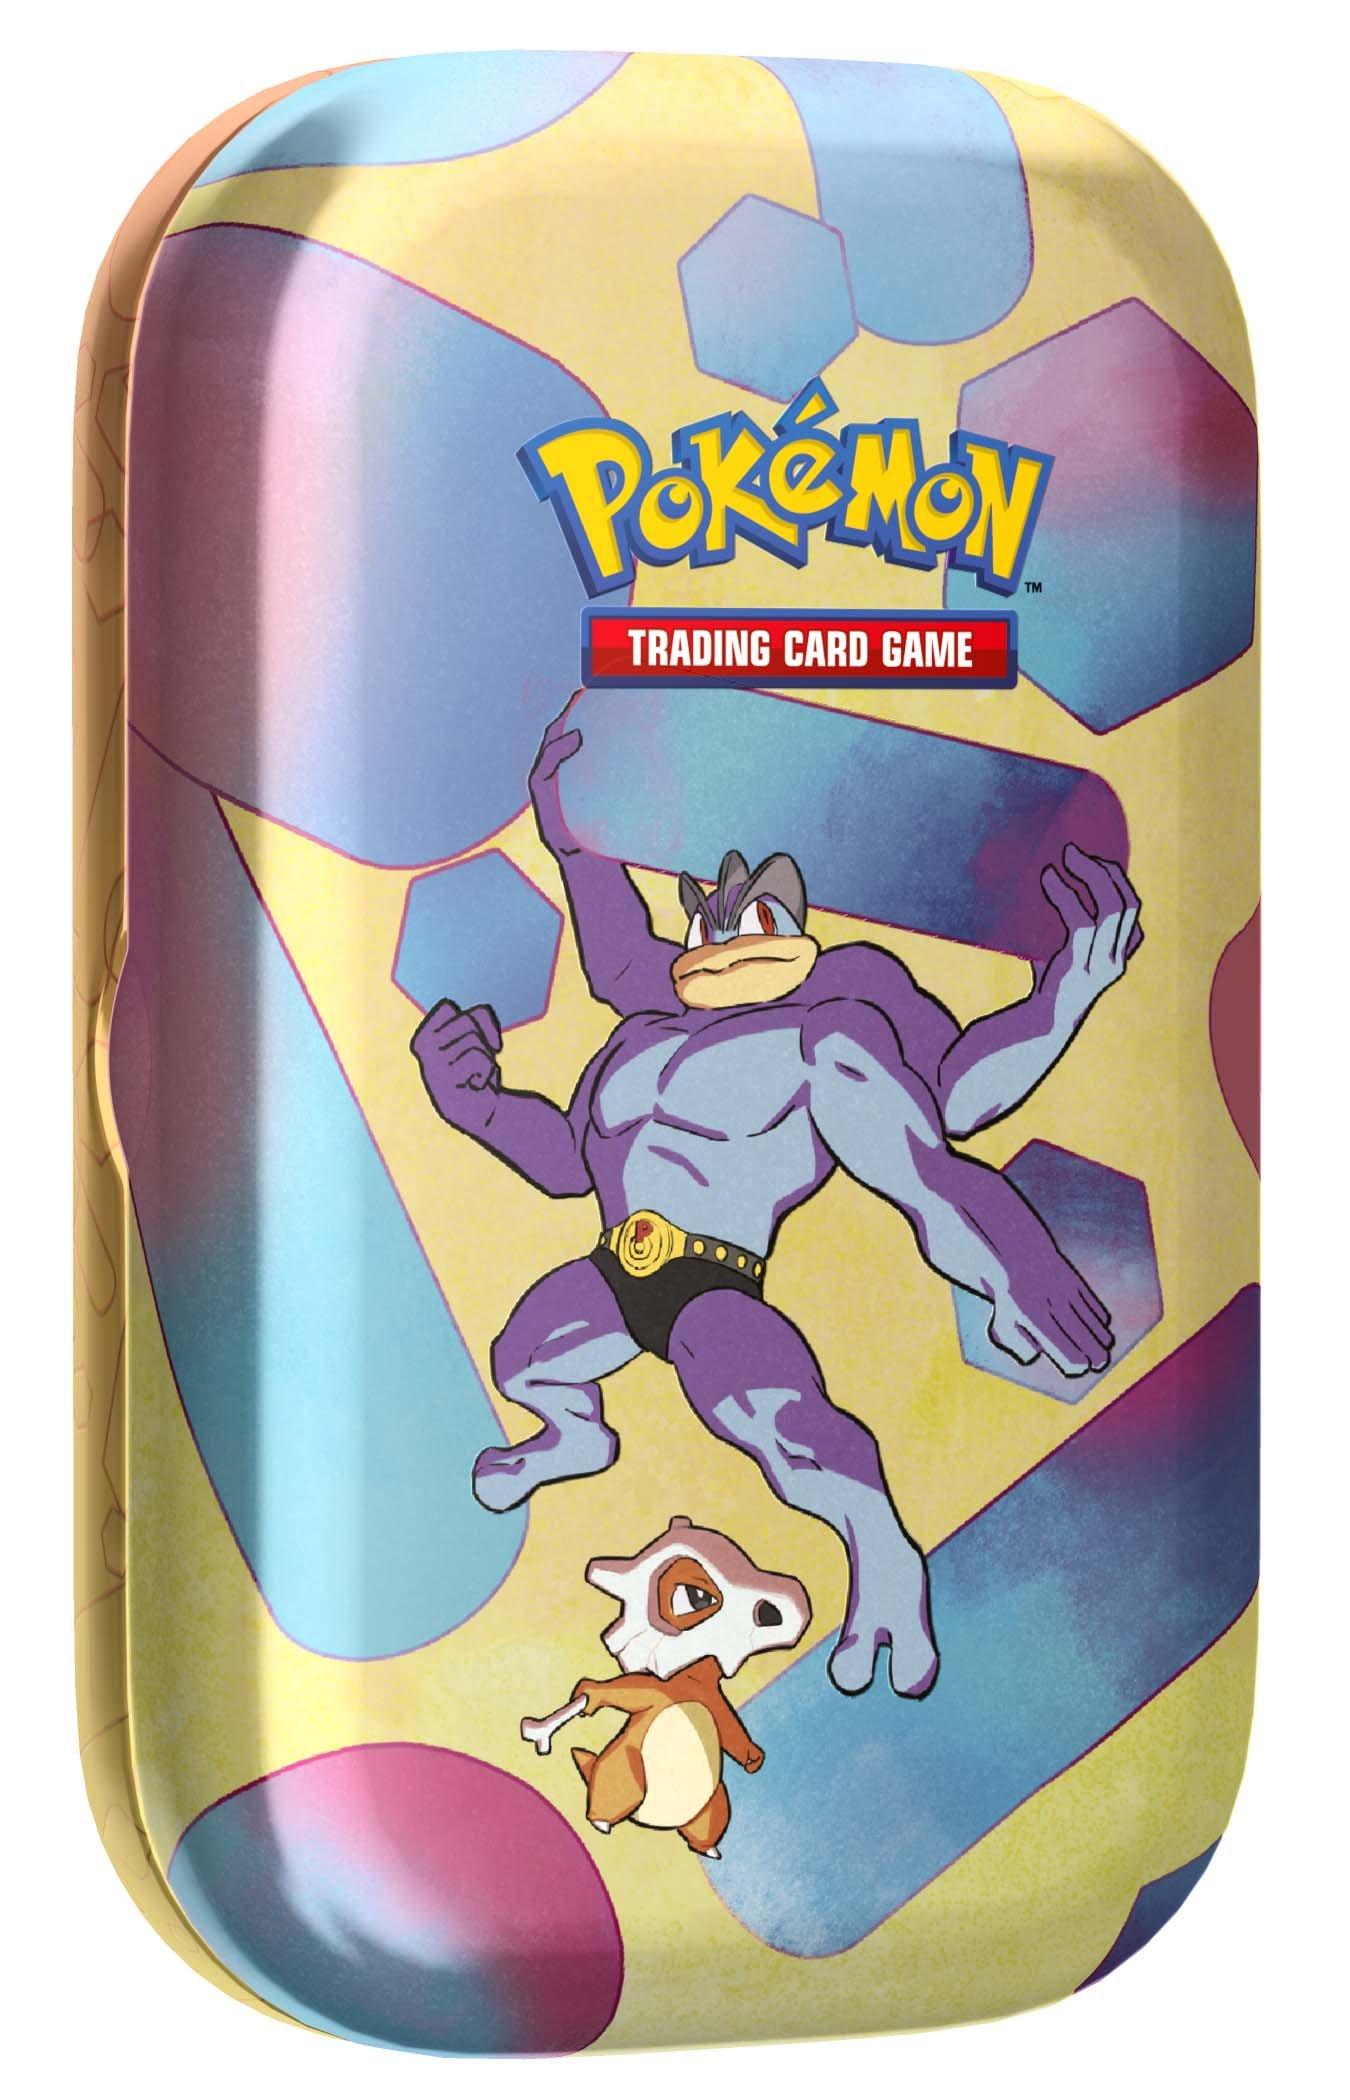 Pokémon TCG: Scarlet & Violet-151 Mini Tin (Gengar & Poliwag